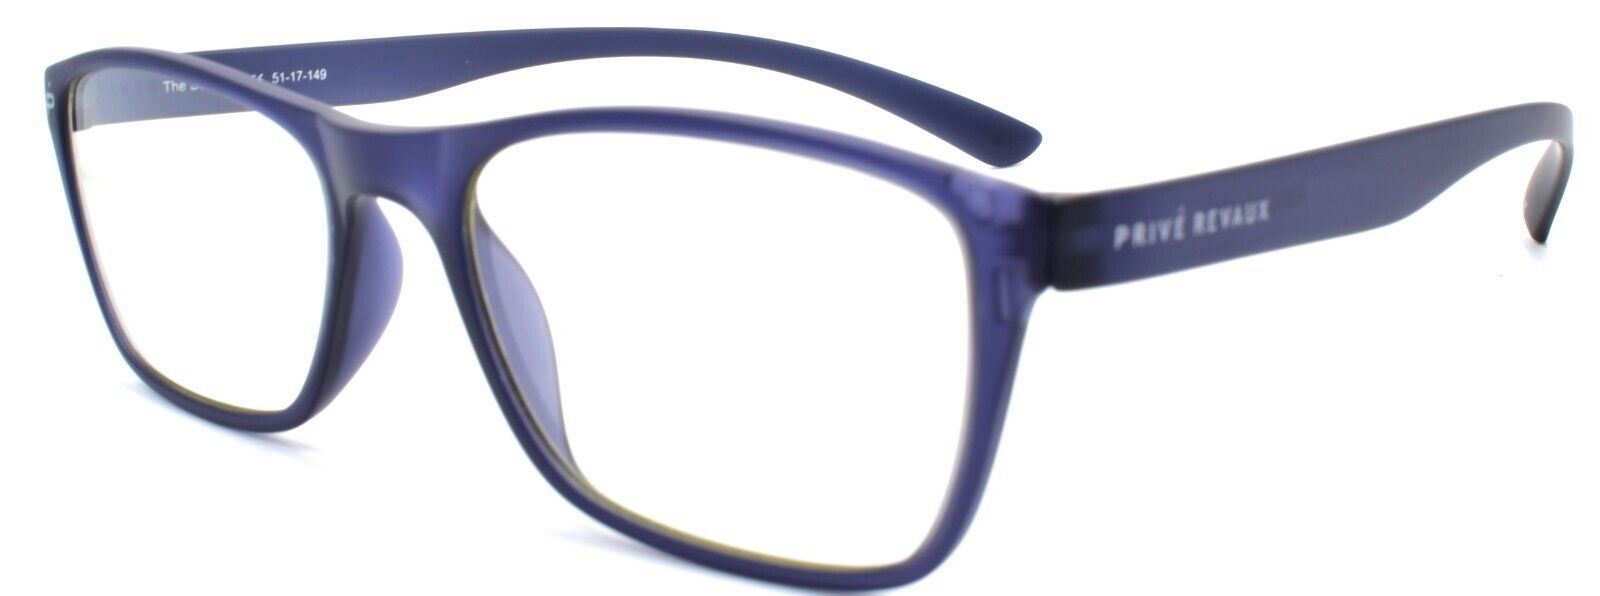 1-Prive Revaux The Socrates Eyeglasses Blue Light Blocking Lightweight Royal Blue-818893022951-IKSpecs